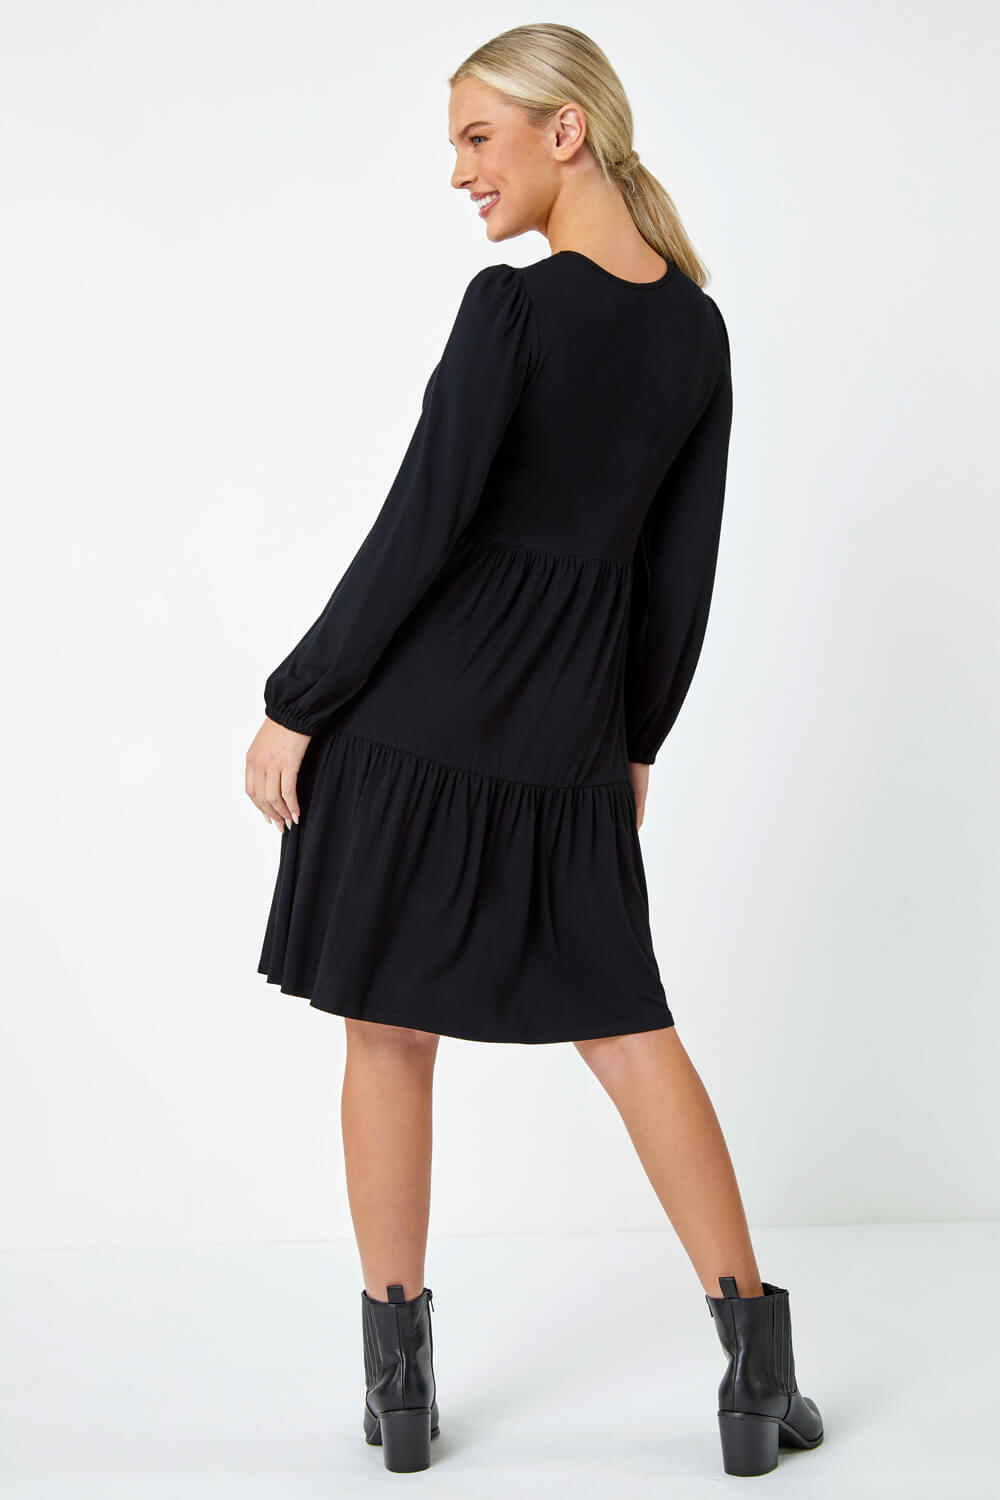 Black Petite Plain Tiered Stretch Dress, Image 3 of 5